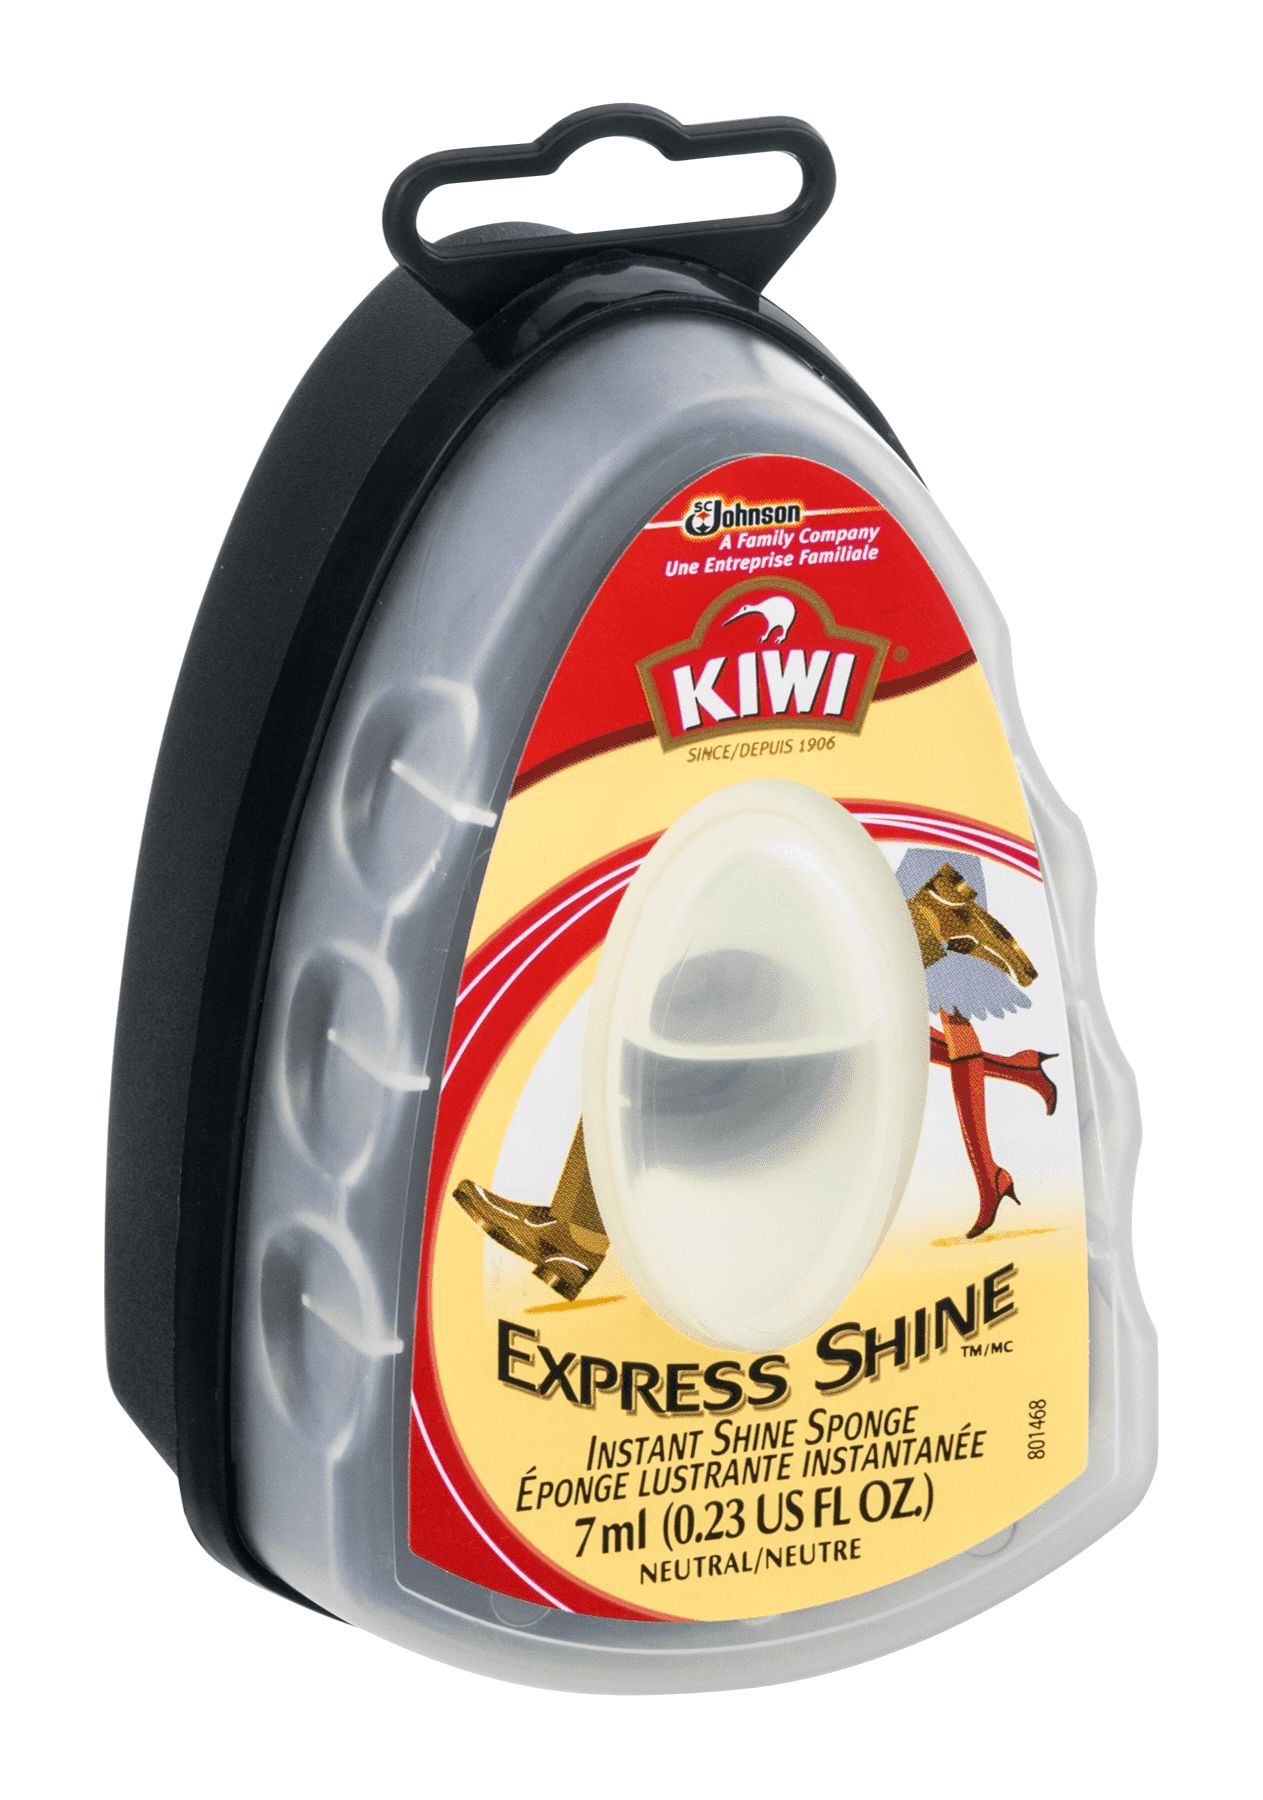 Kiwi Express Shoe Shine Sponge Applicator – Neutral